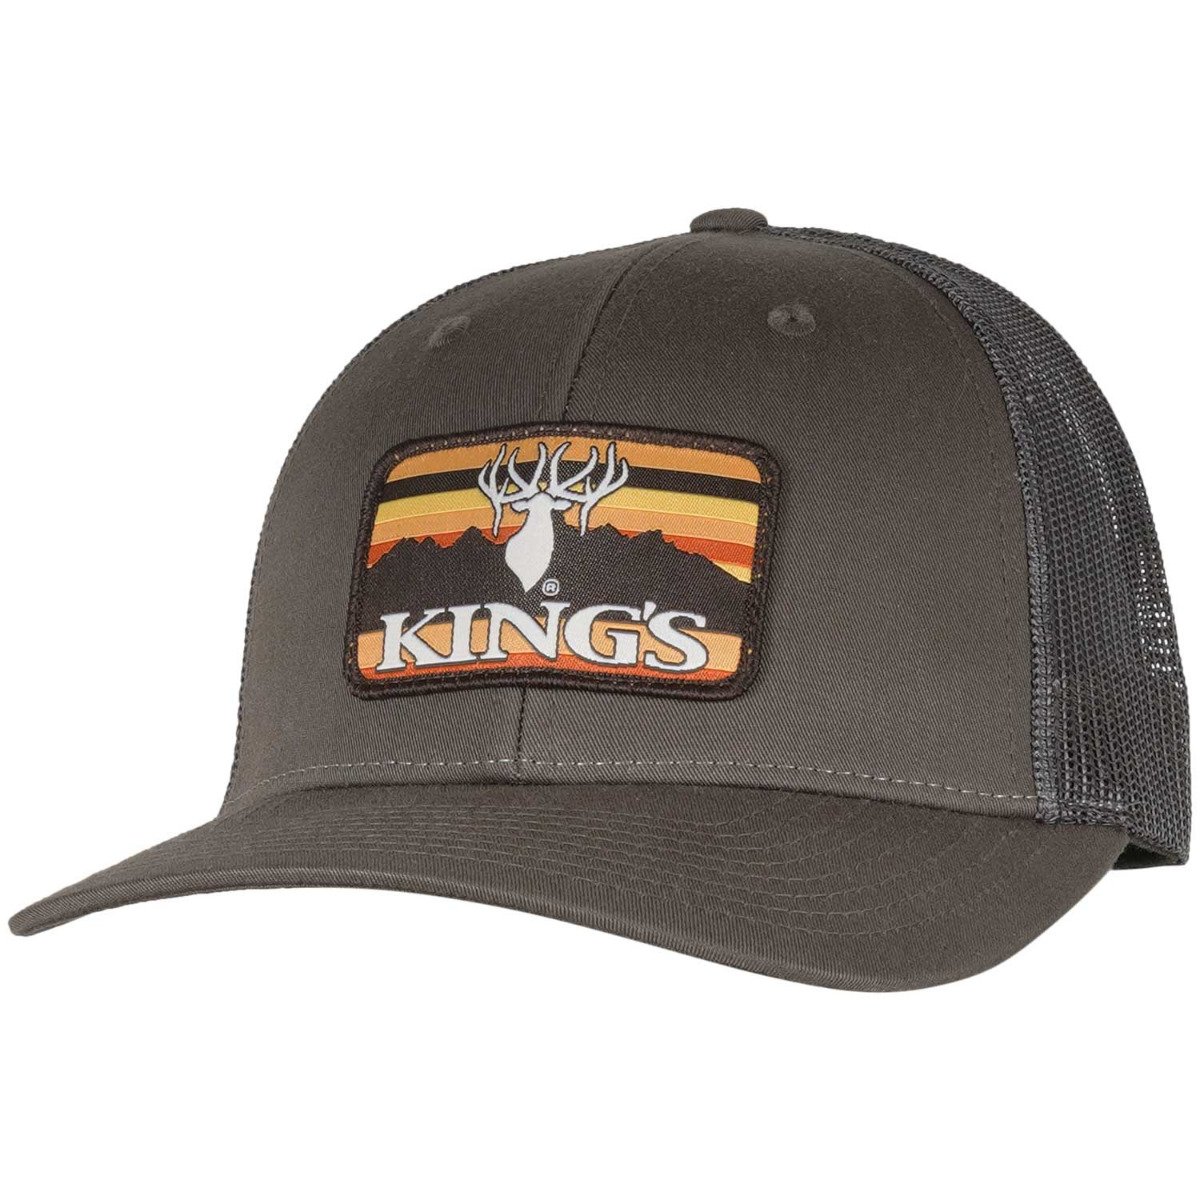 King's Camo Vista Patch Trucker Hat